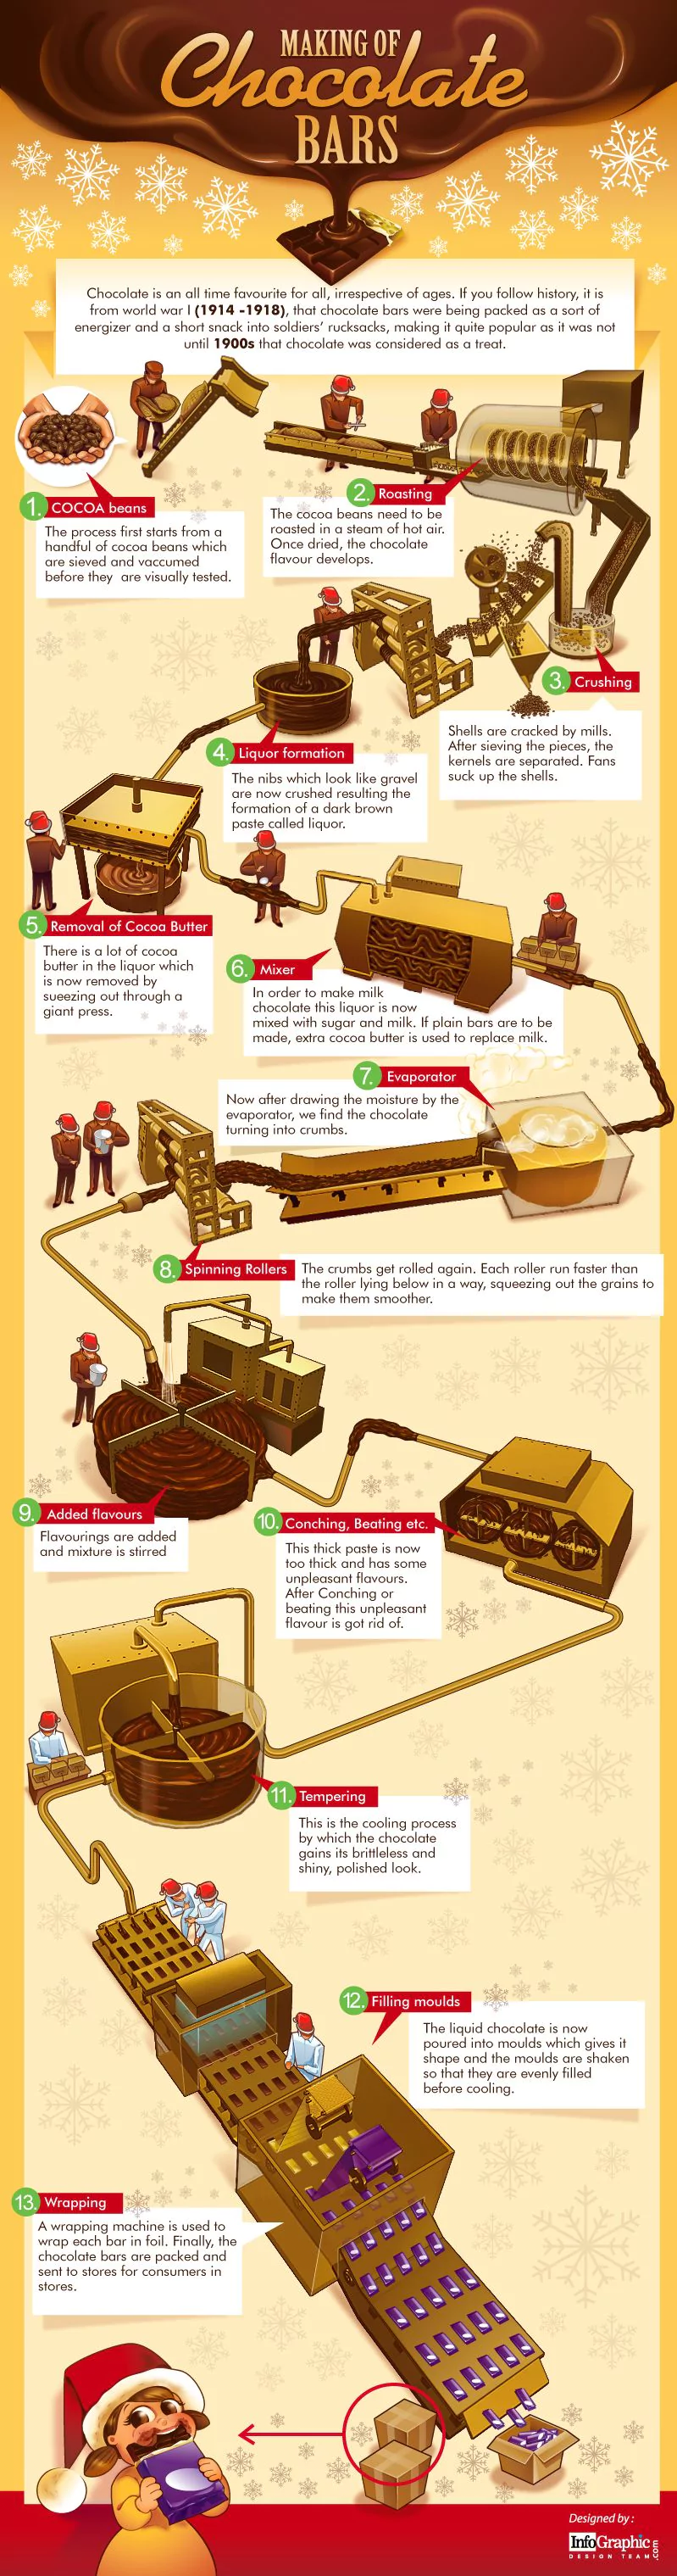 The Making of Chocolate Bars